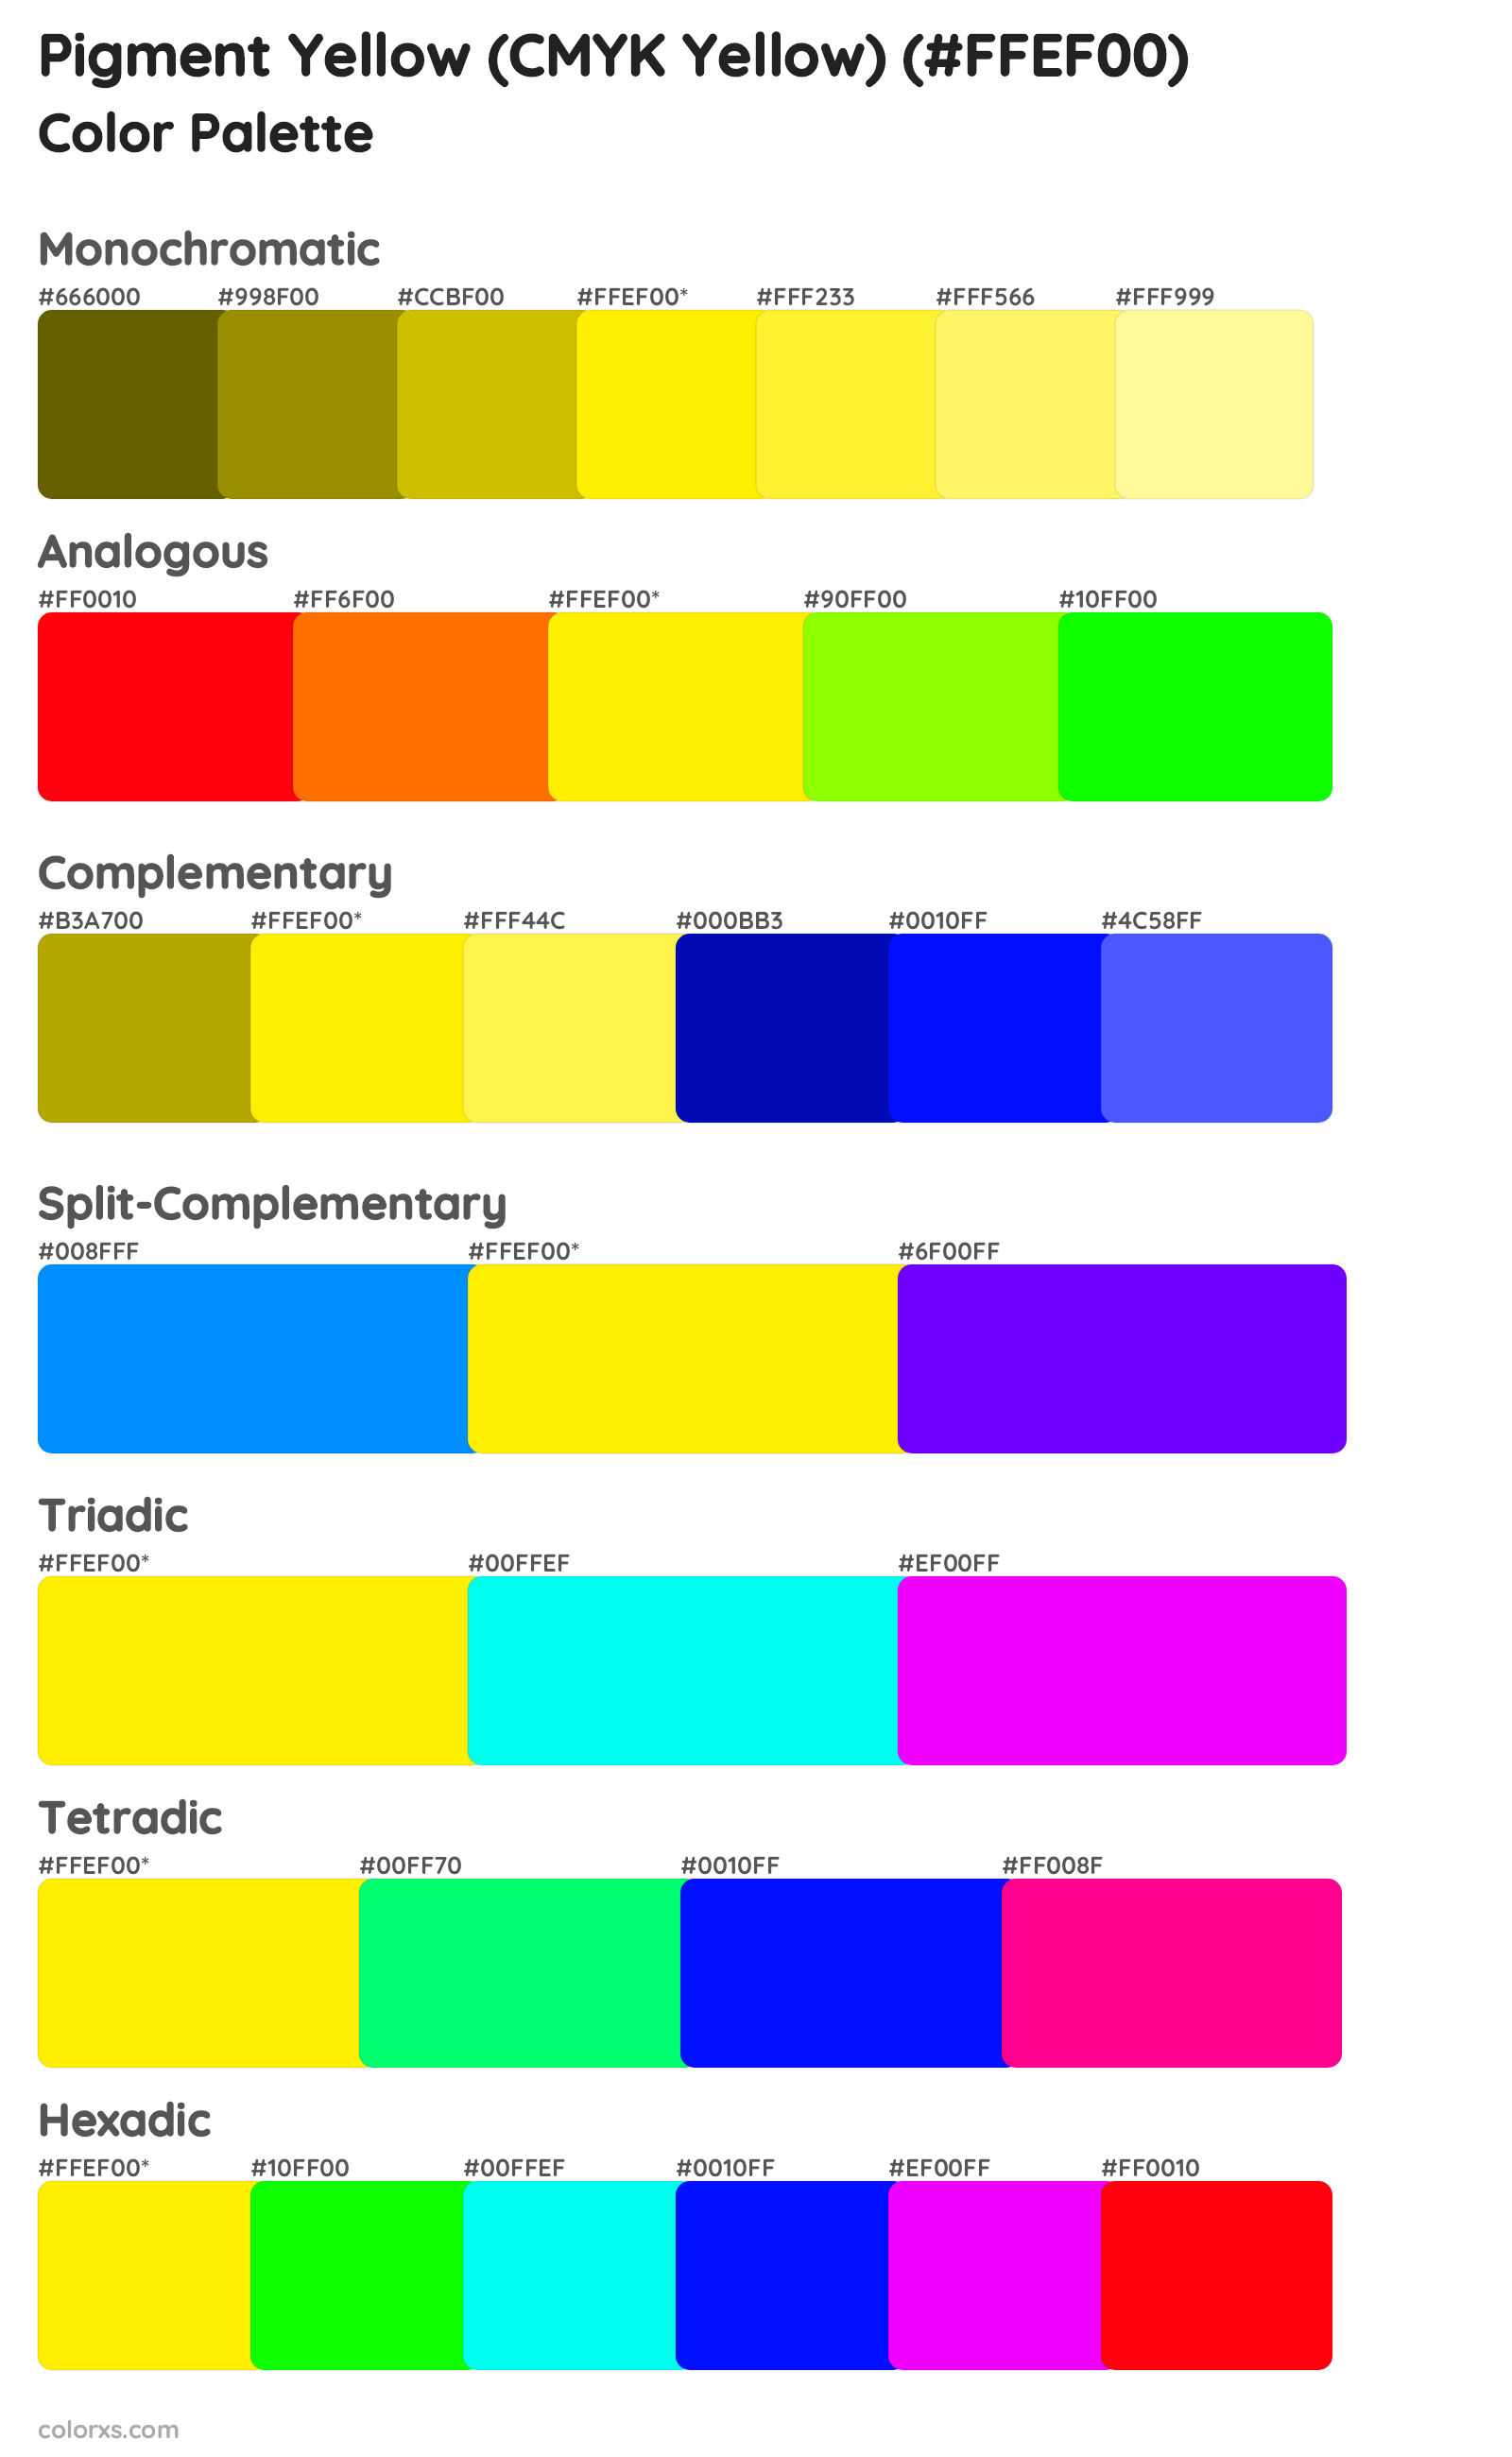 Pigment Yellow (CMYK Yellow) Color Scheme Palettes